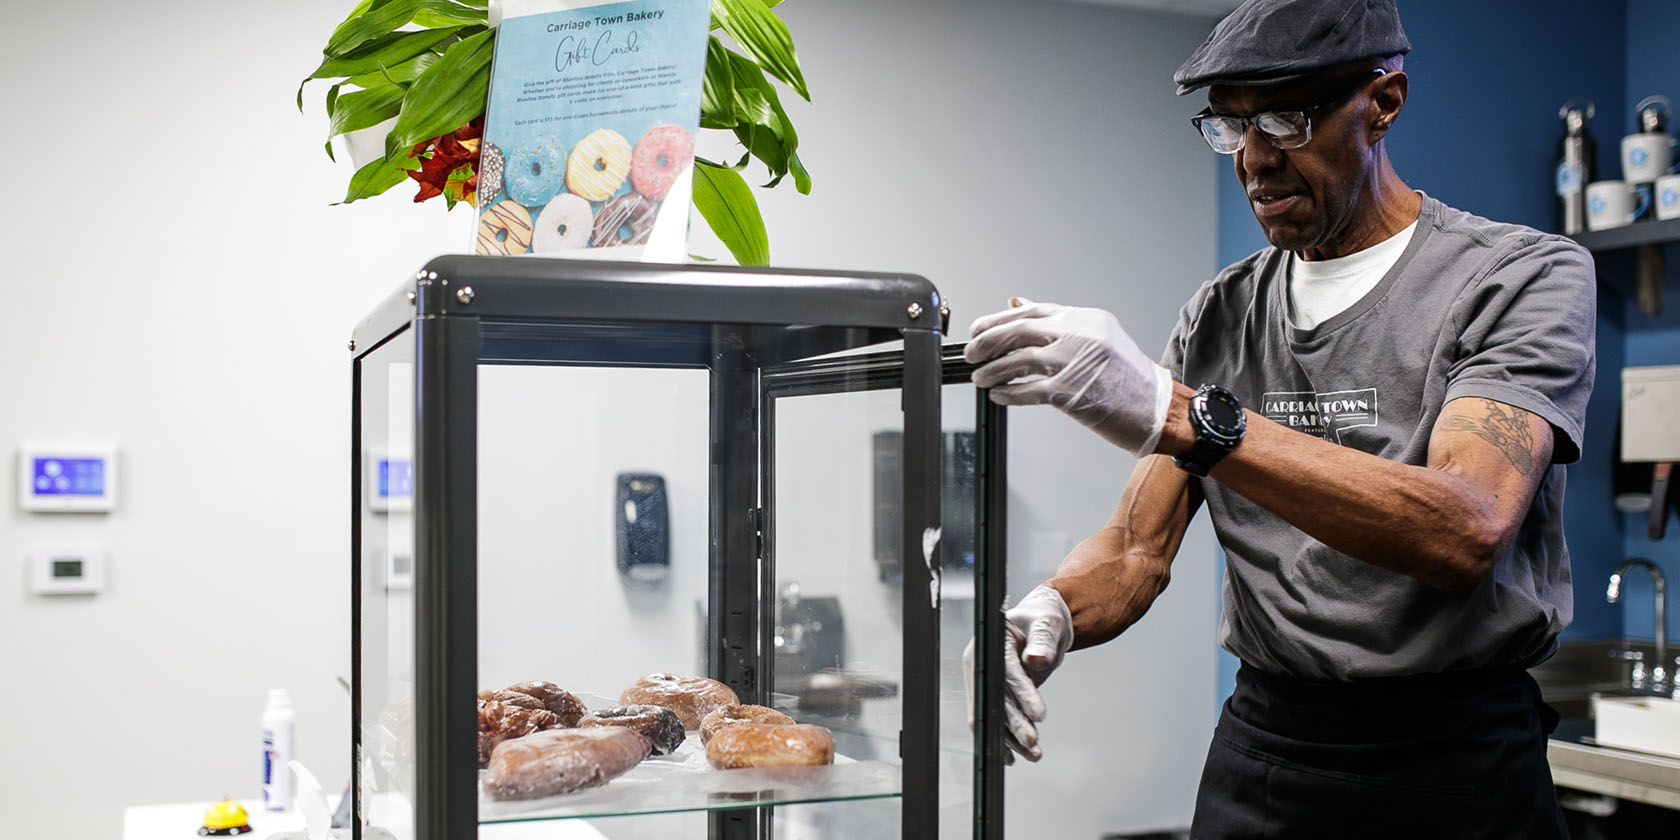 A man prepares a display case full of doughnuts.